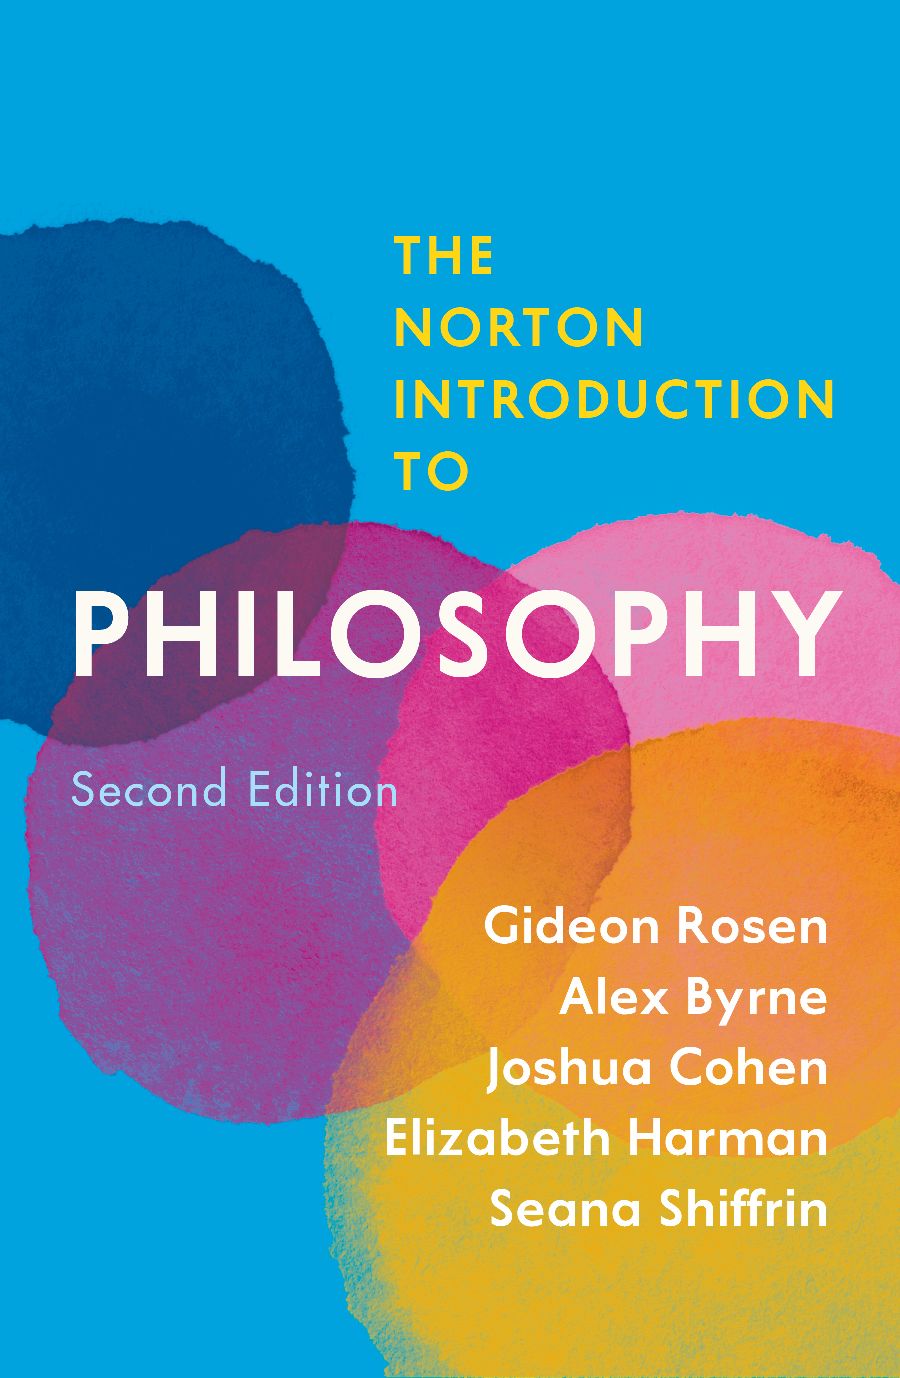 [PDF/ePub] The Norton Introduction to Philosophy